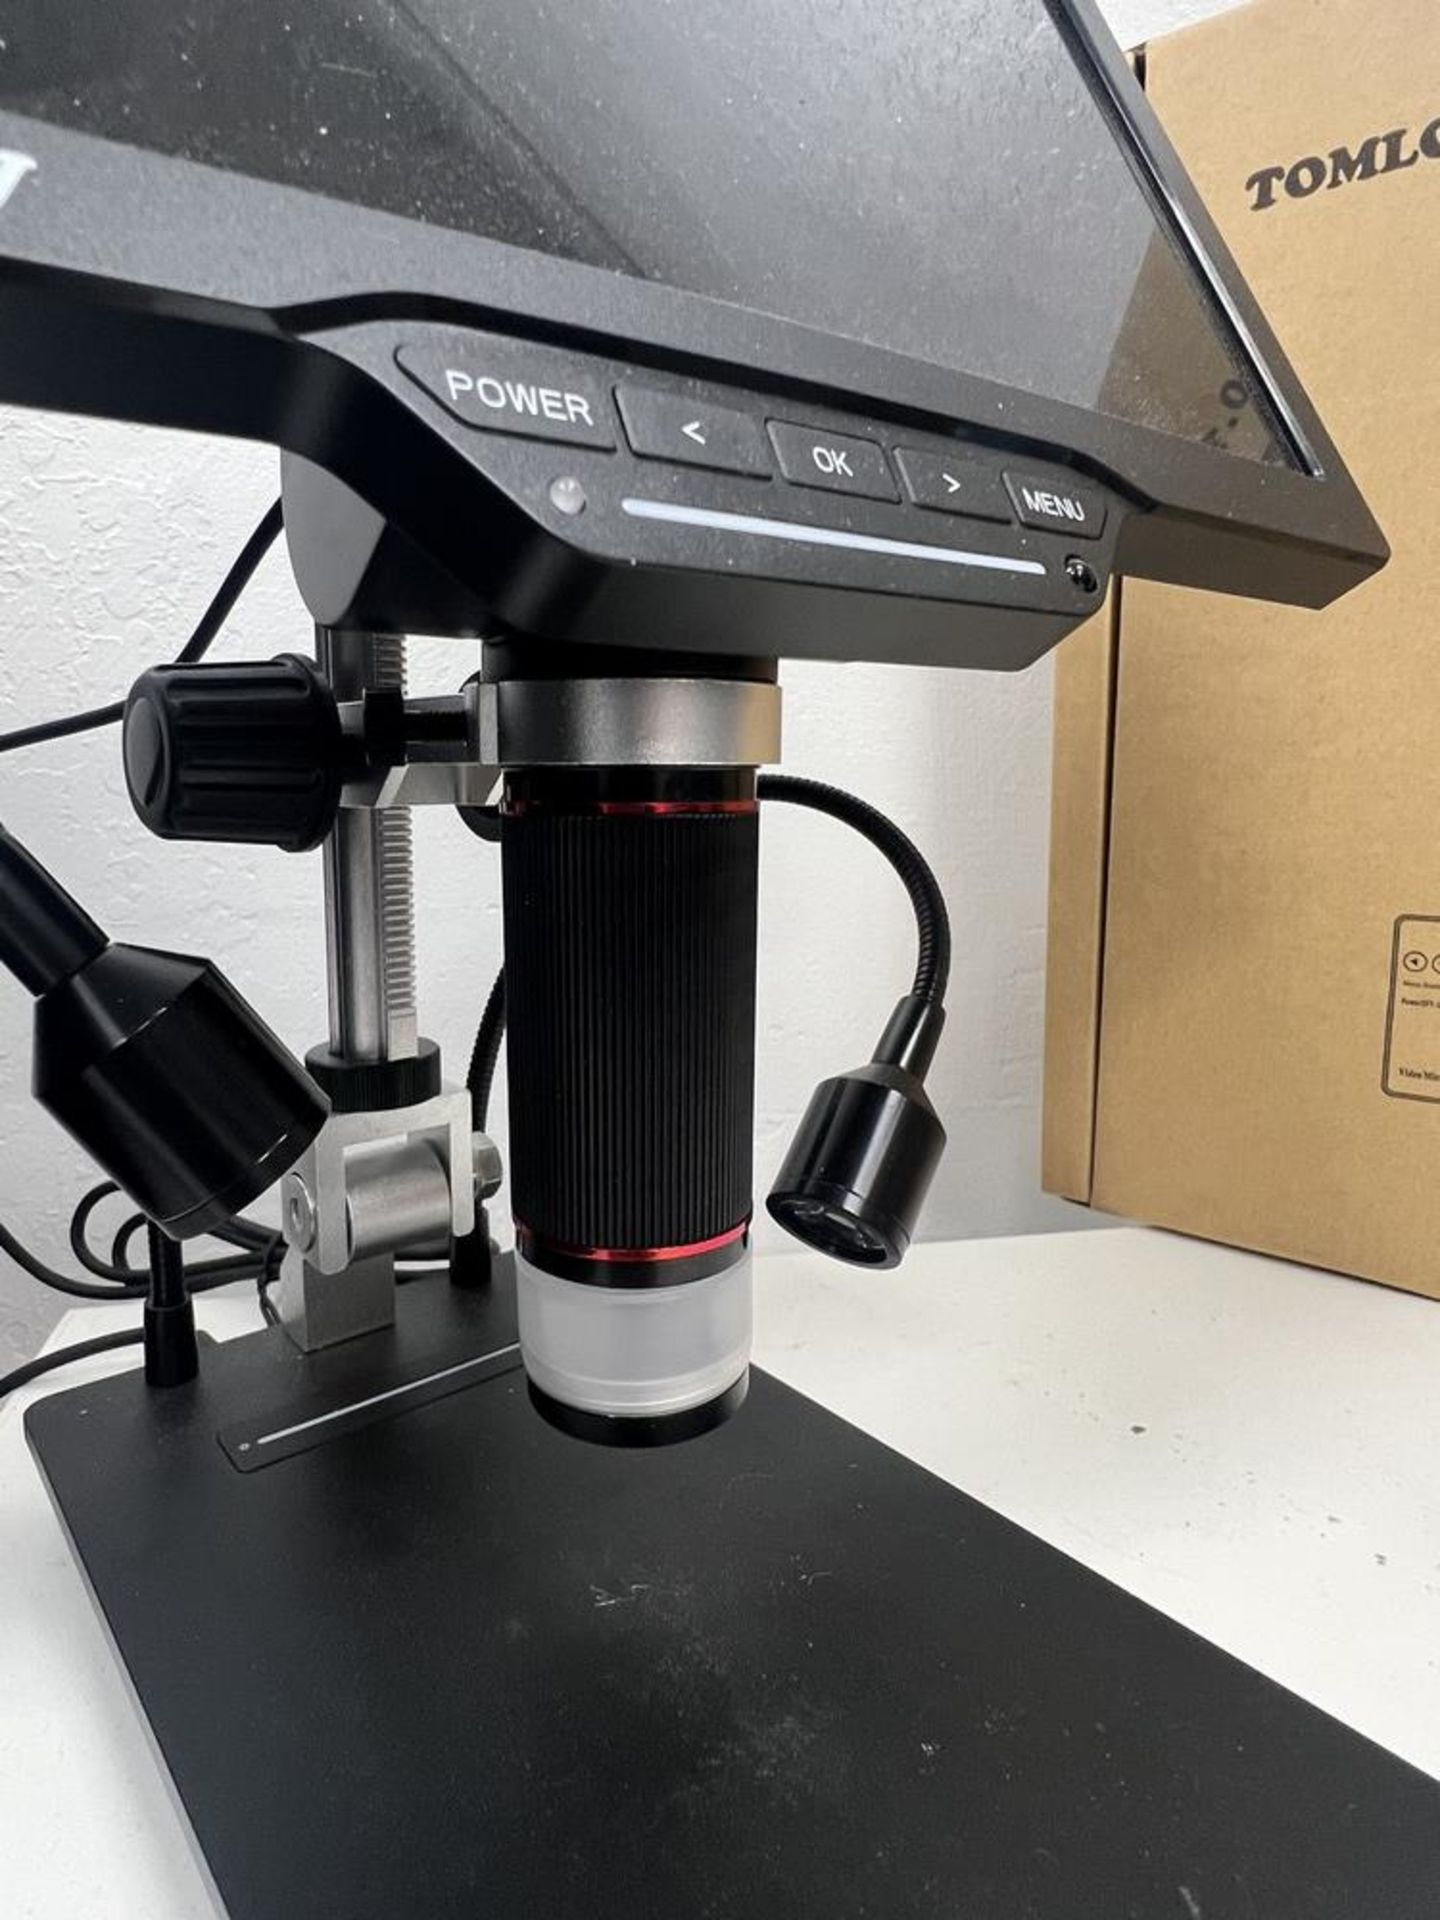 Tomlov 10.1" Digital LCD Microscope With Remote Air Pressure Generator - Image 3 of 5